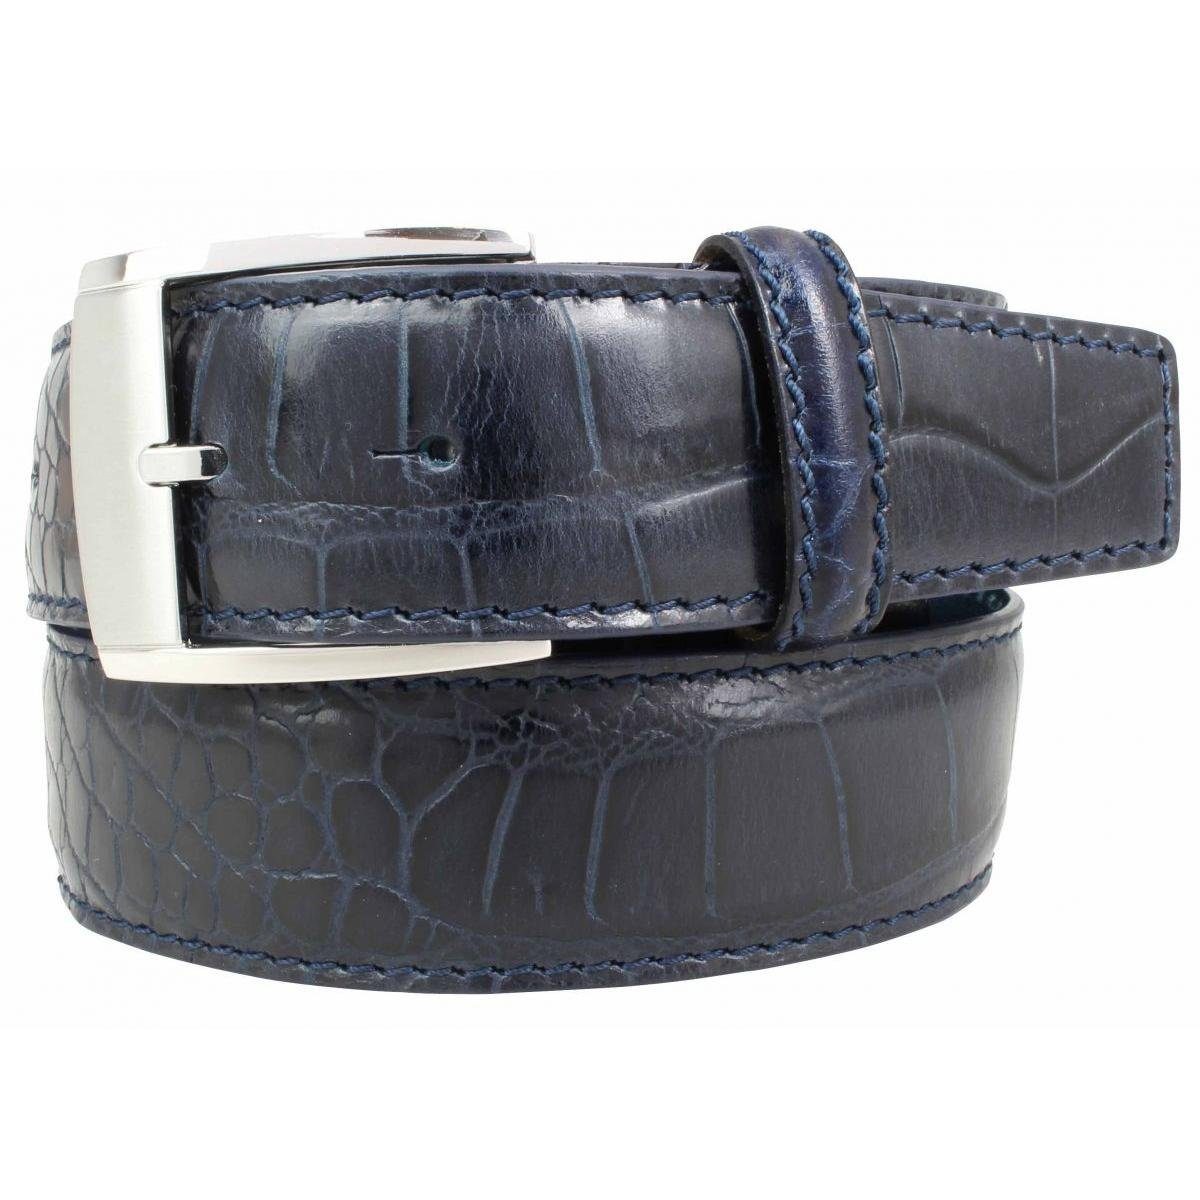 BELTINGER Ledergürtel Jeansgürtel mit Krokoprägung 4 cm - Leder-Gürtel für Herren 40mm Kroko Marine, Silber